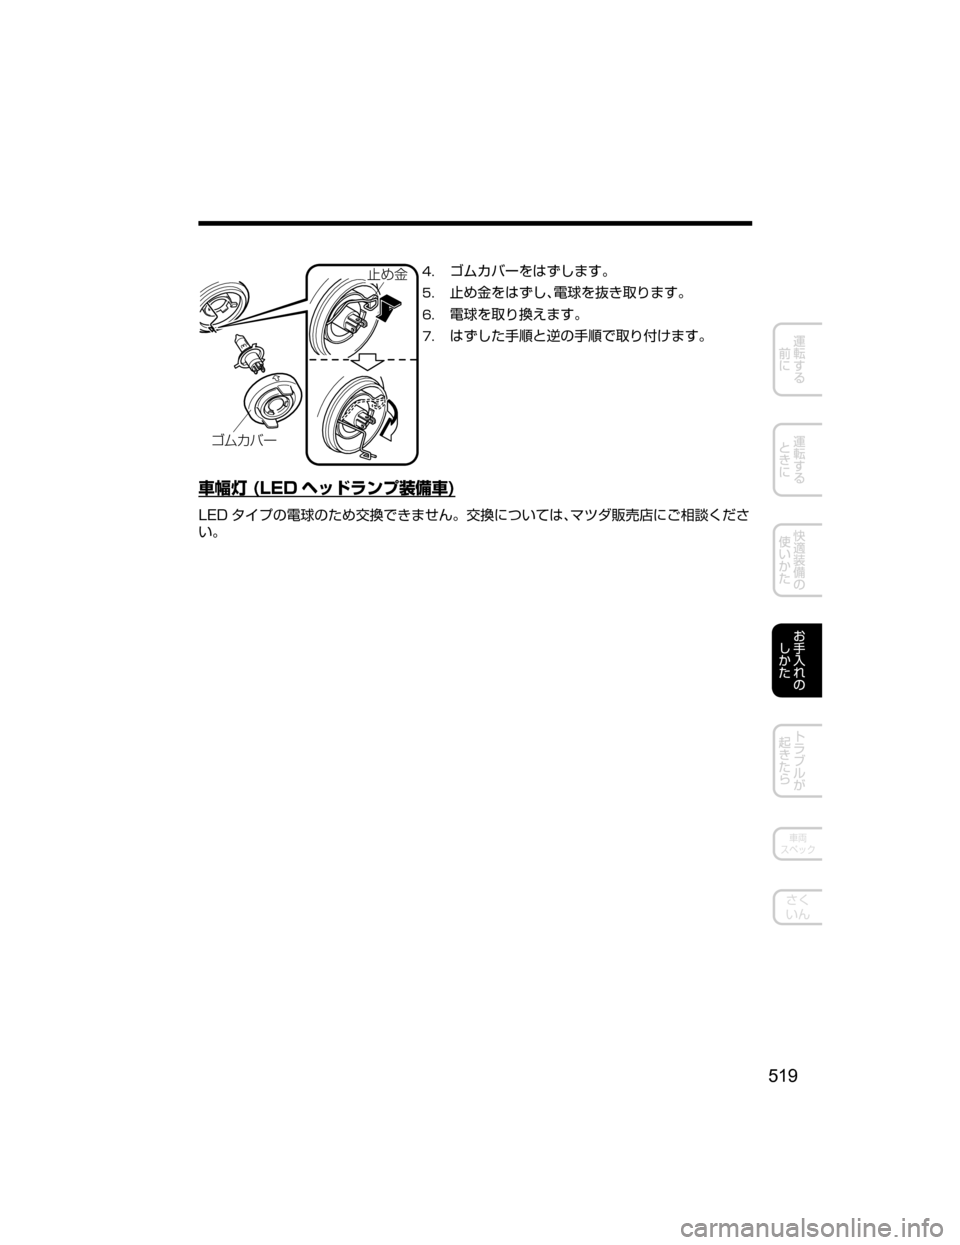 Mazda Model Demio 18 取扱説明書 デミオ In Japanese 656 Pages Page 560 U I S U